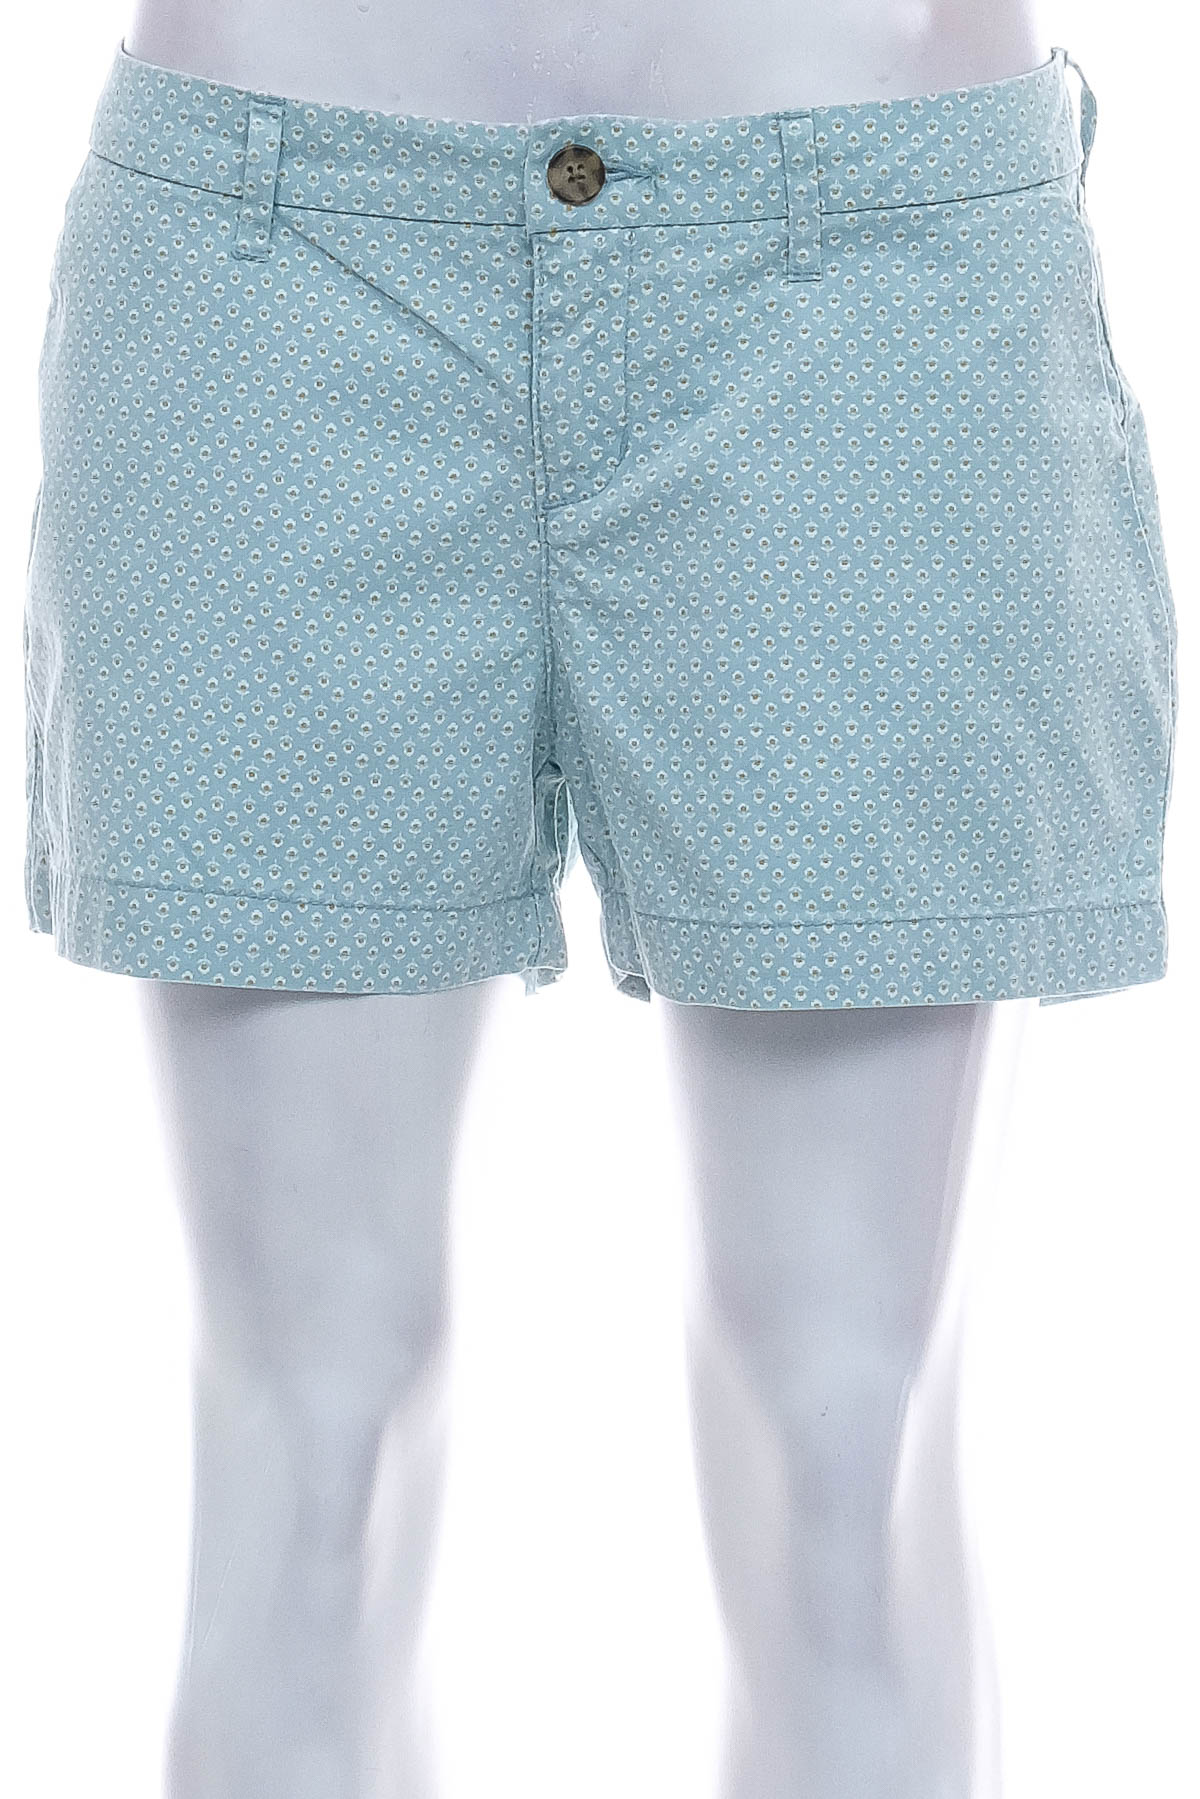 Female shorts - OLD NAVY - 0